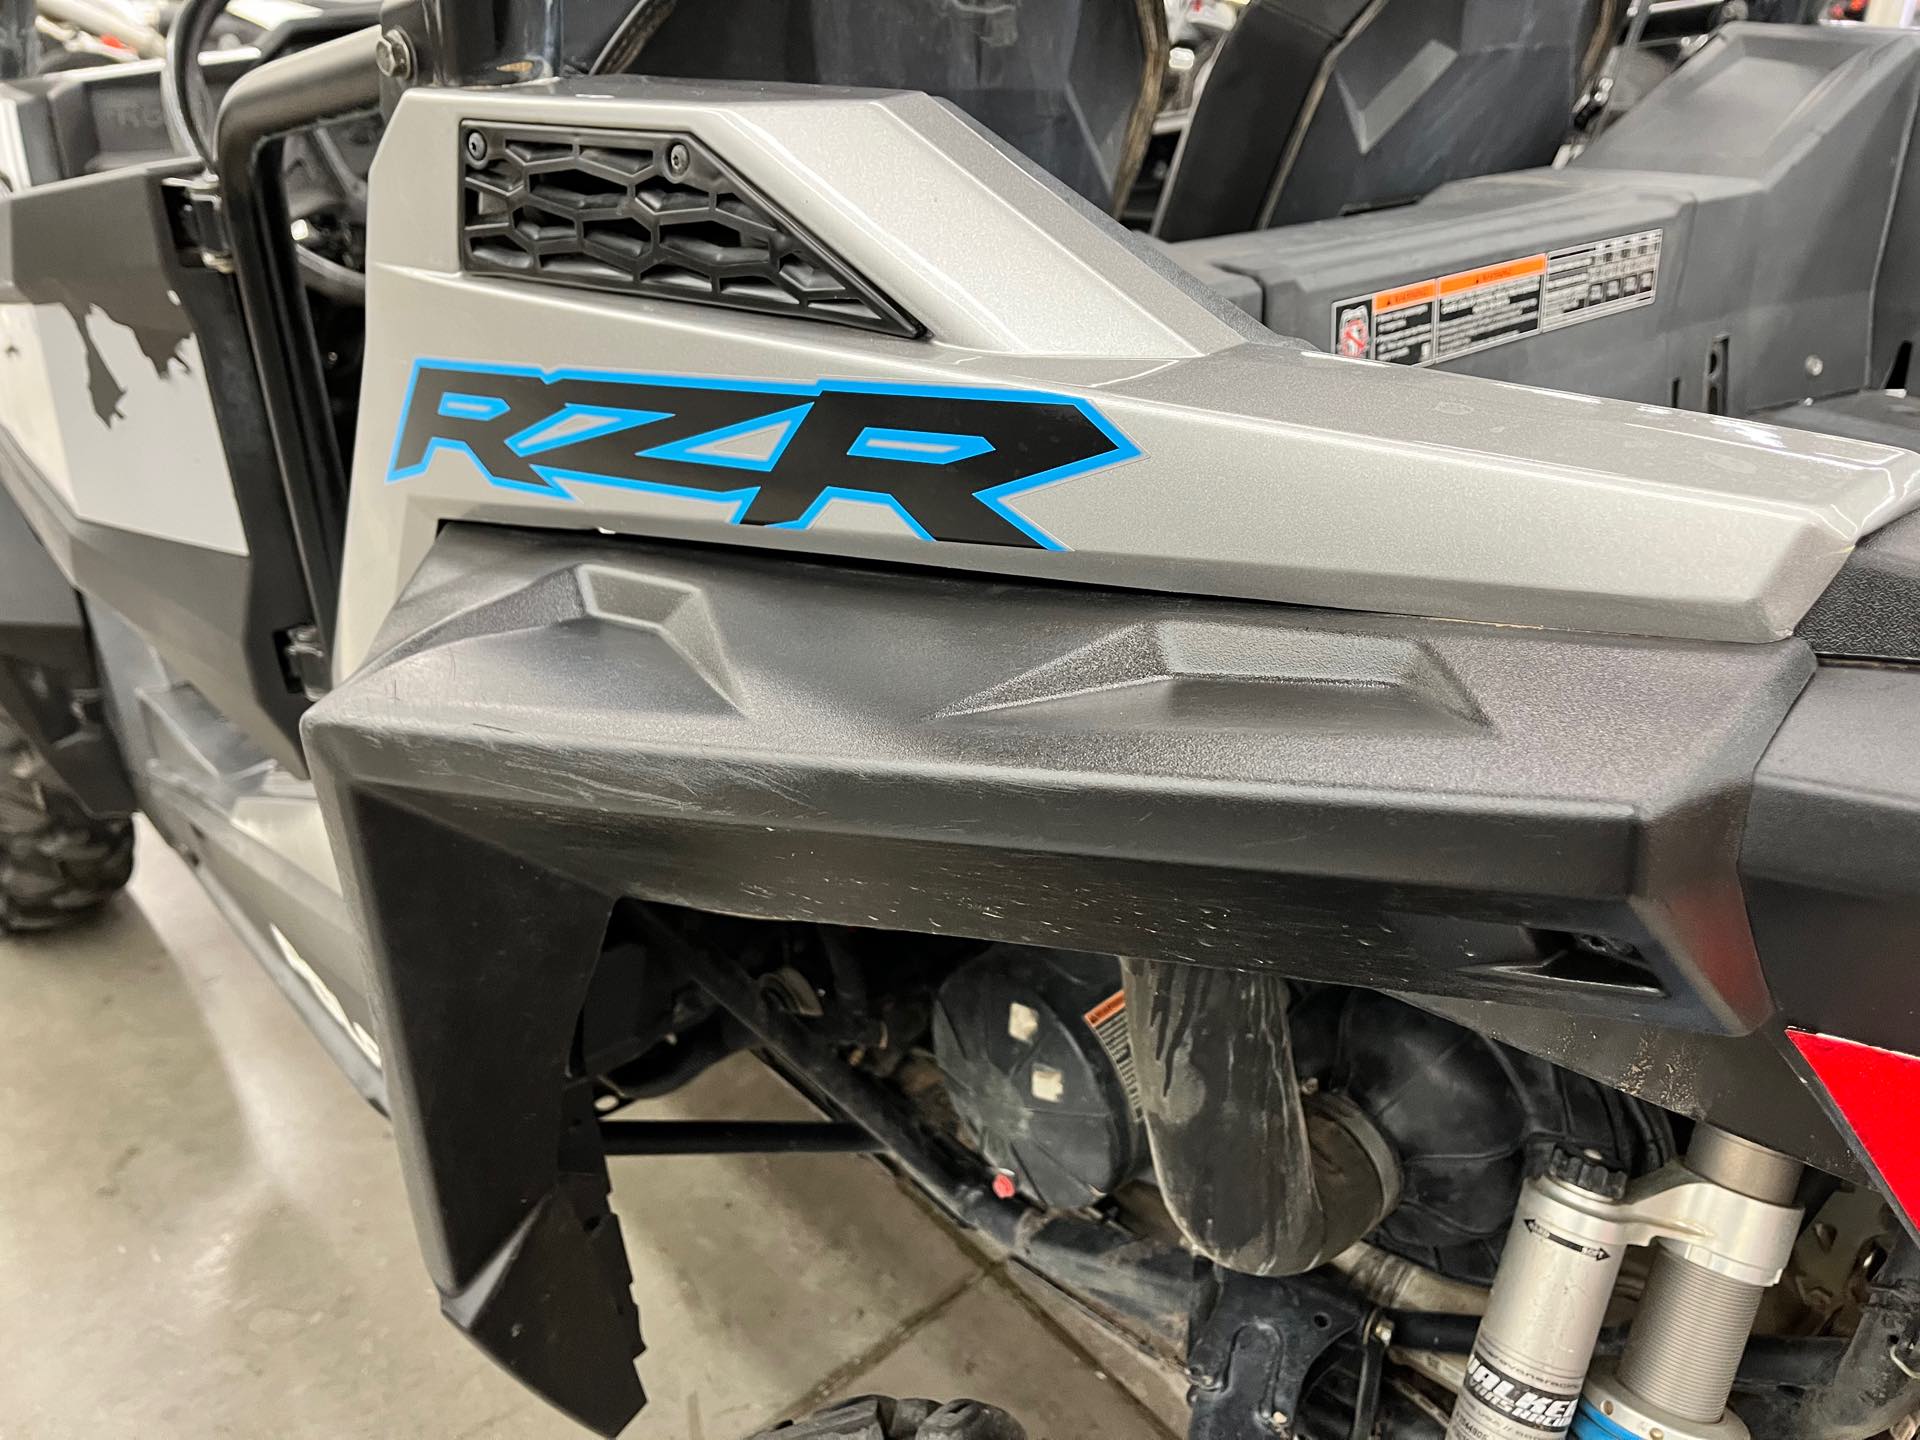 2020 Polaris RZR S 1000 EPS at Aces Motorcycles - Denver